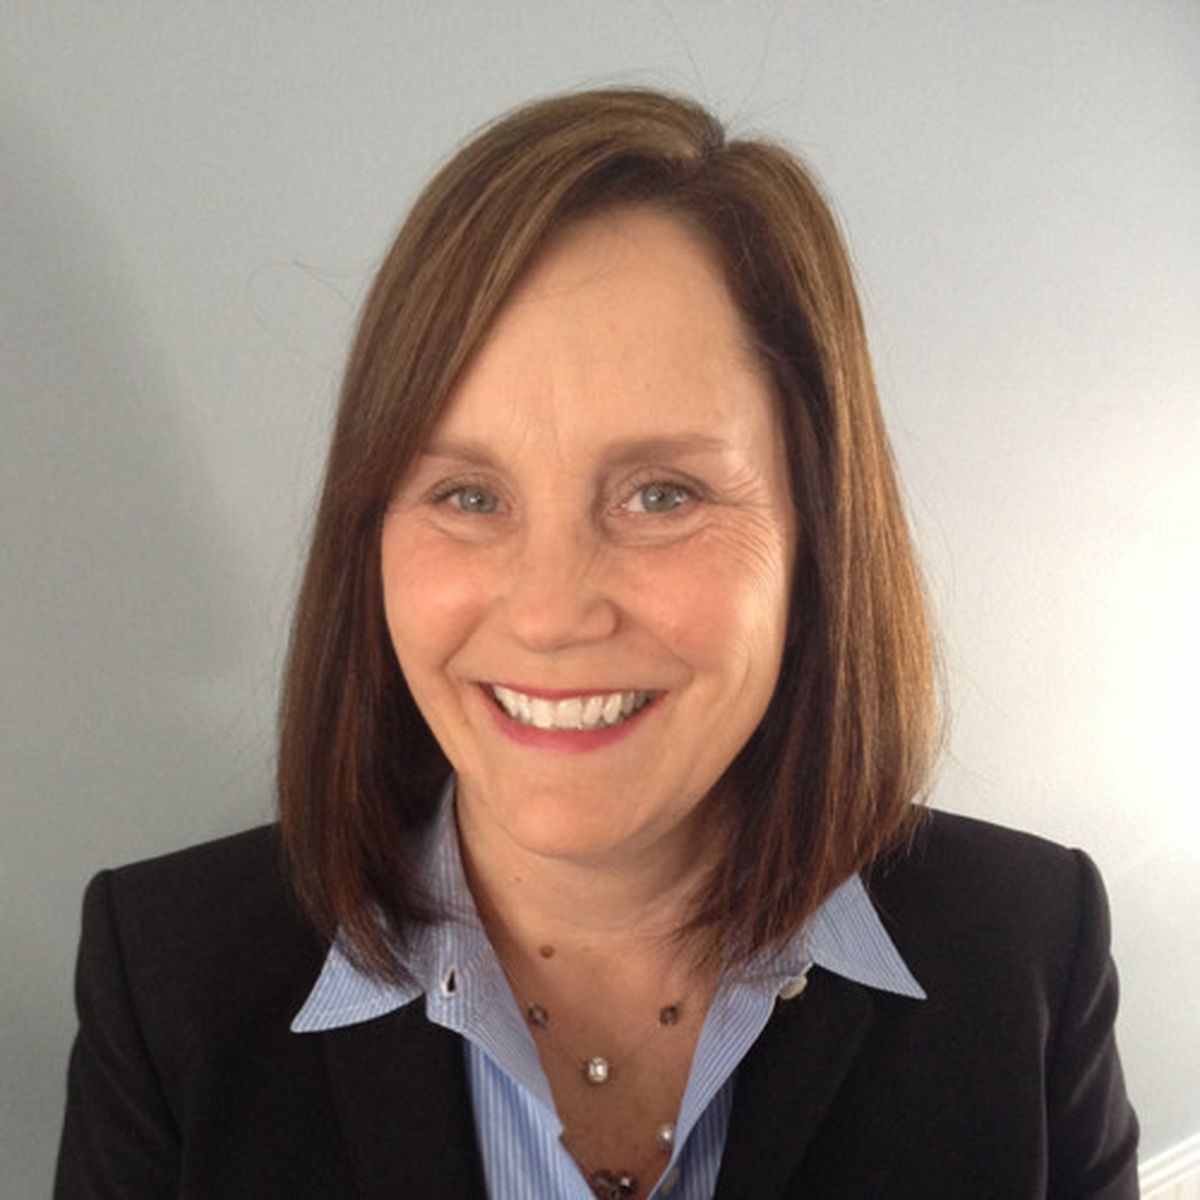 LinkedIn: Lori Ridgeway, ServiceNow Practice Leader